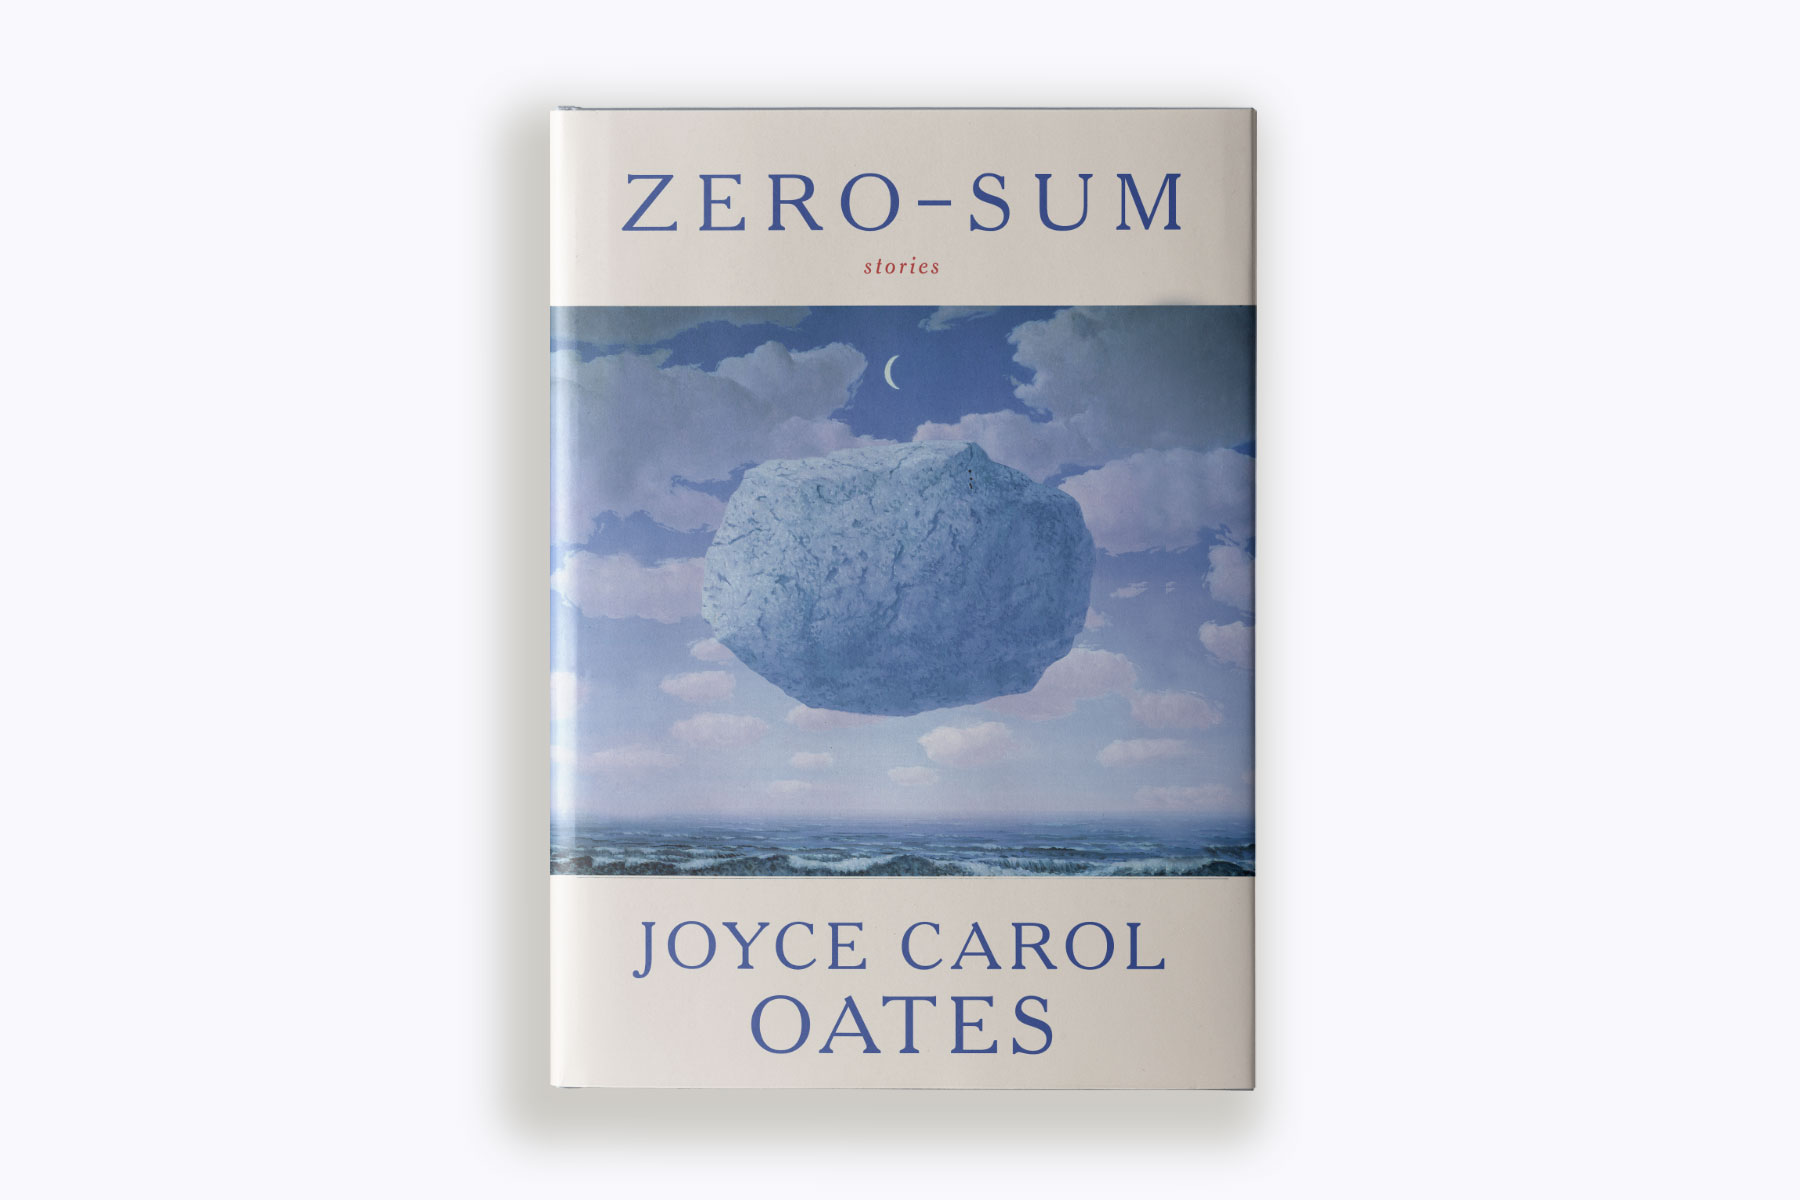 The cover of author Joyce Carol Oates book, Zero-Sum Stories.